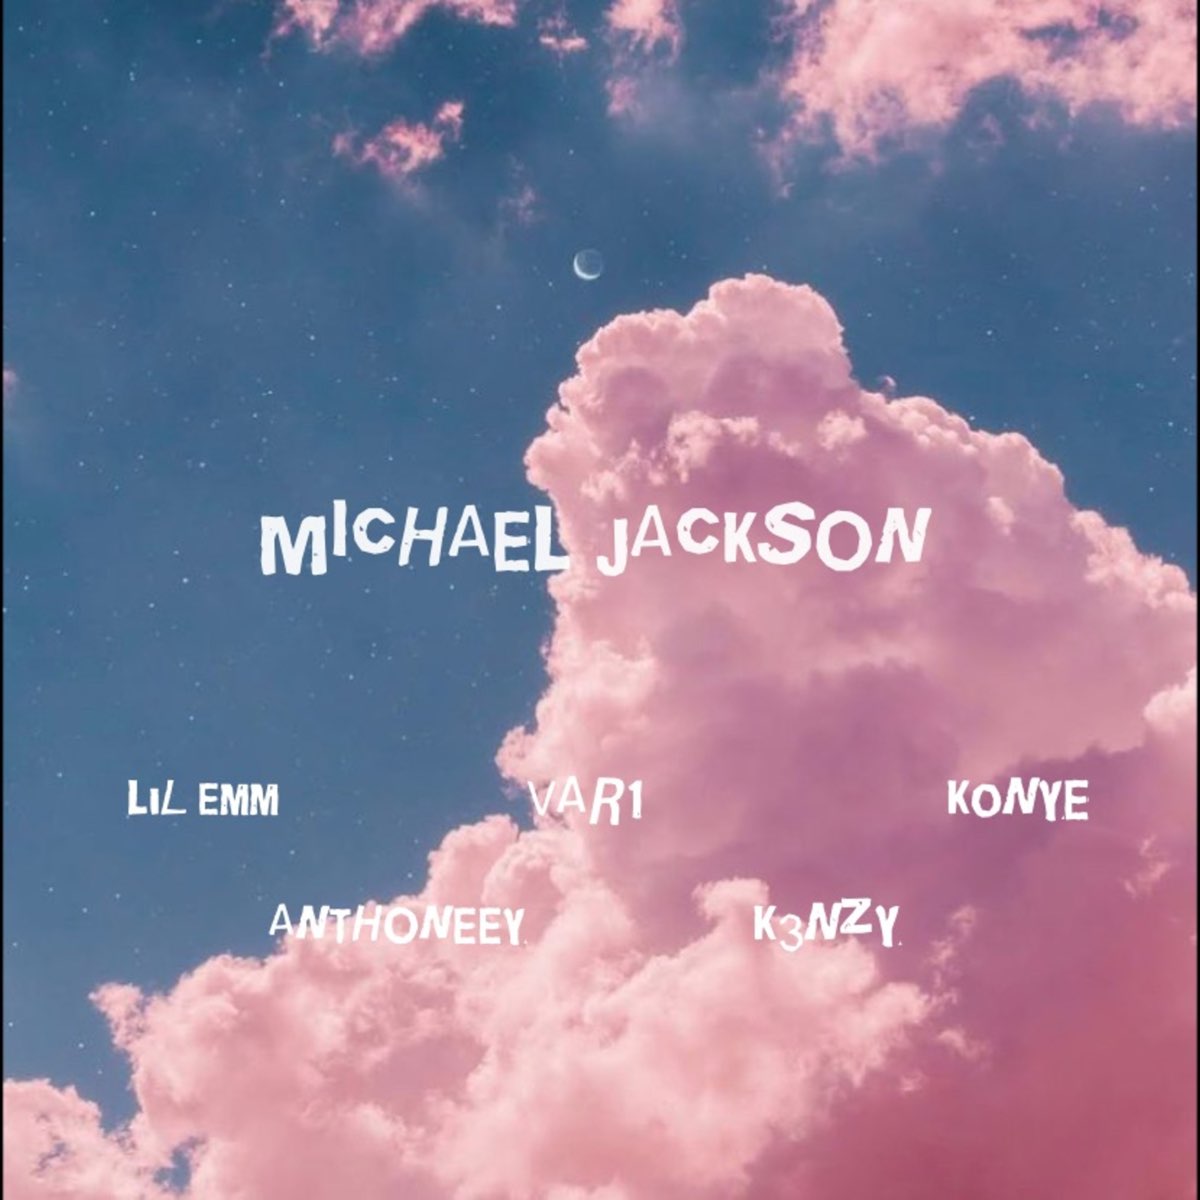 Lil Emm Michael Jackson ft. K3nzy Anthoneey